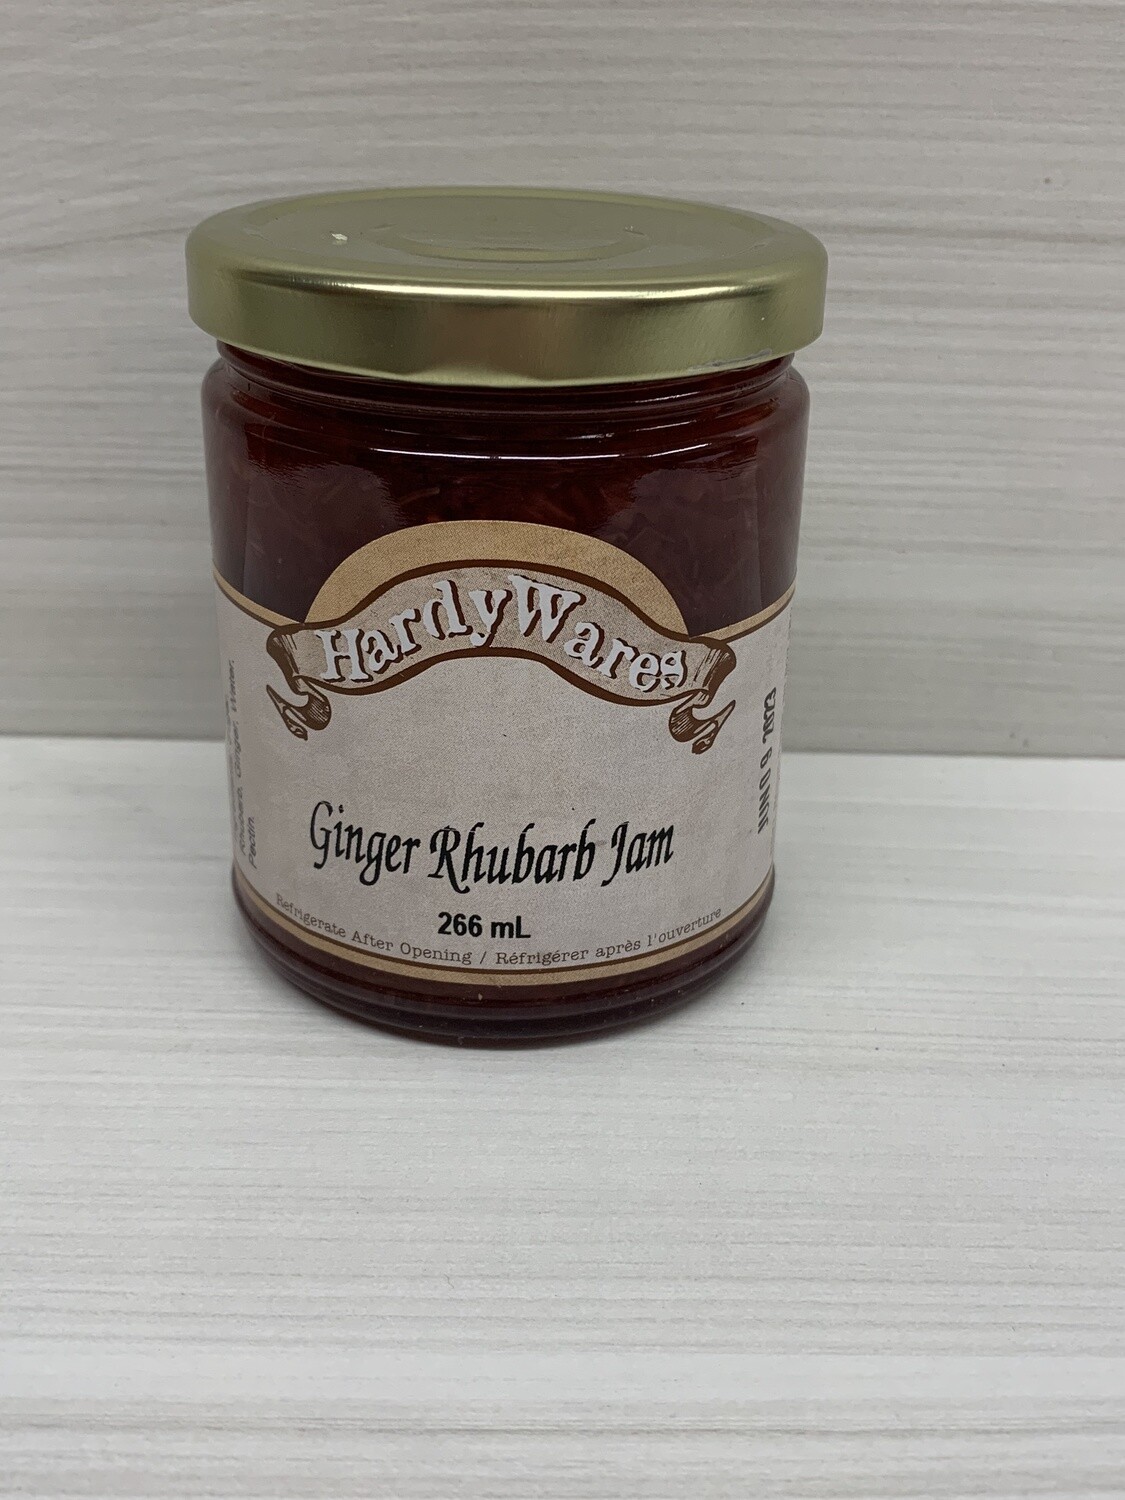 Hardywares Preserves Ginger RhubarbJam